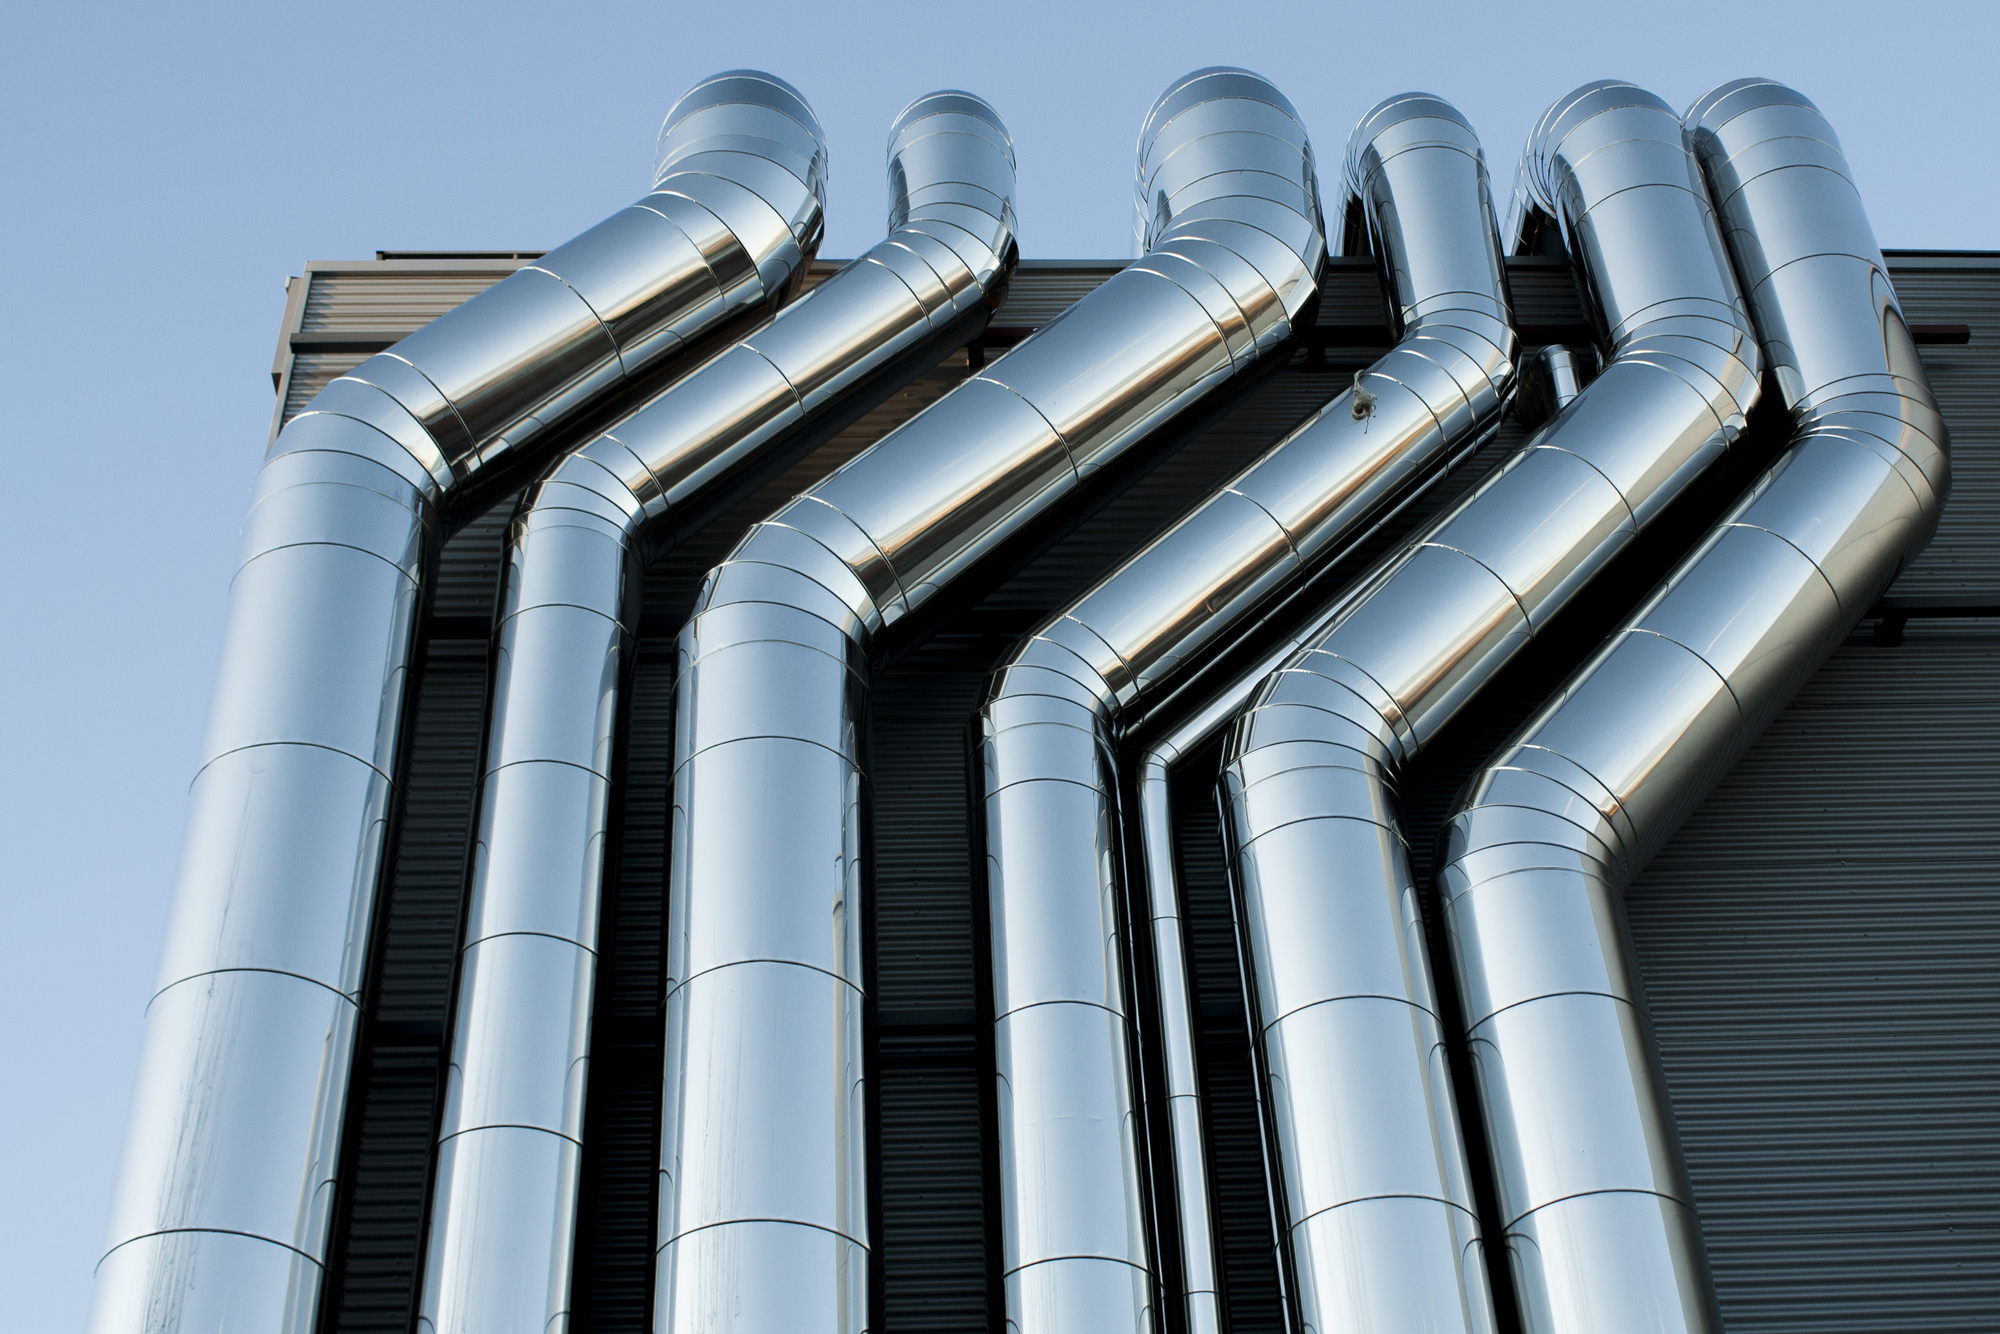 Air pipes HVAC ventilation